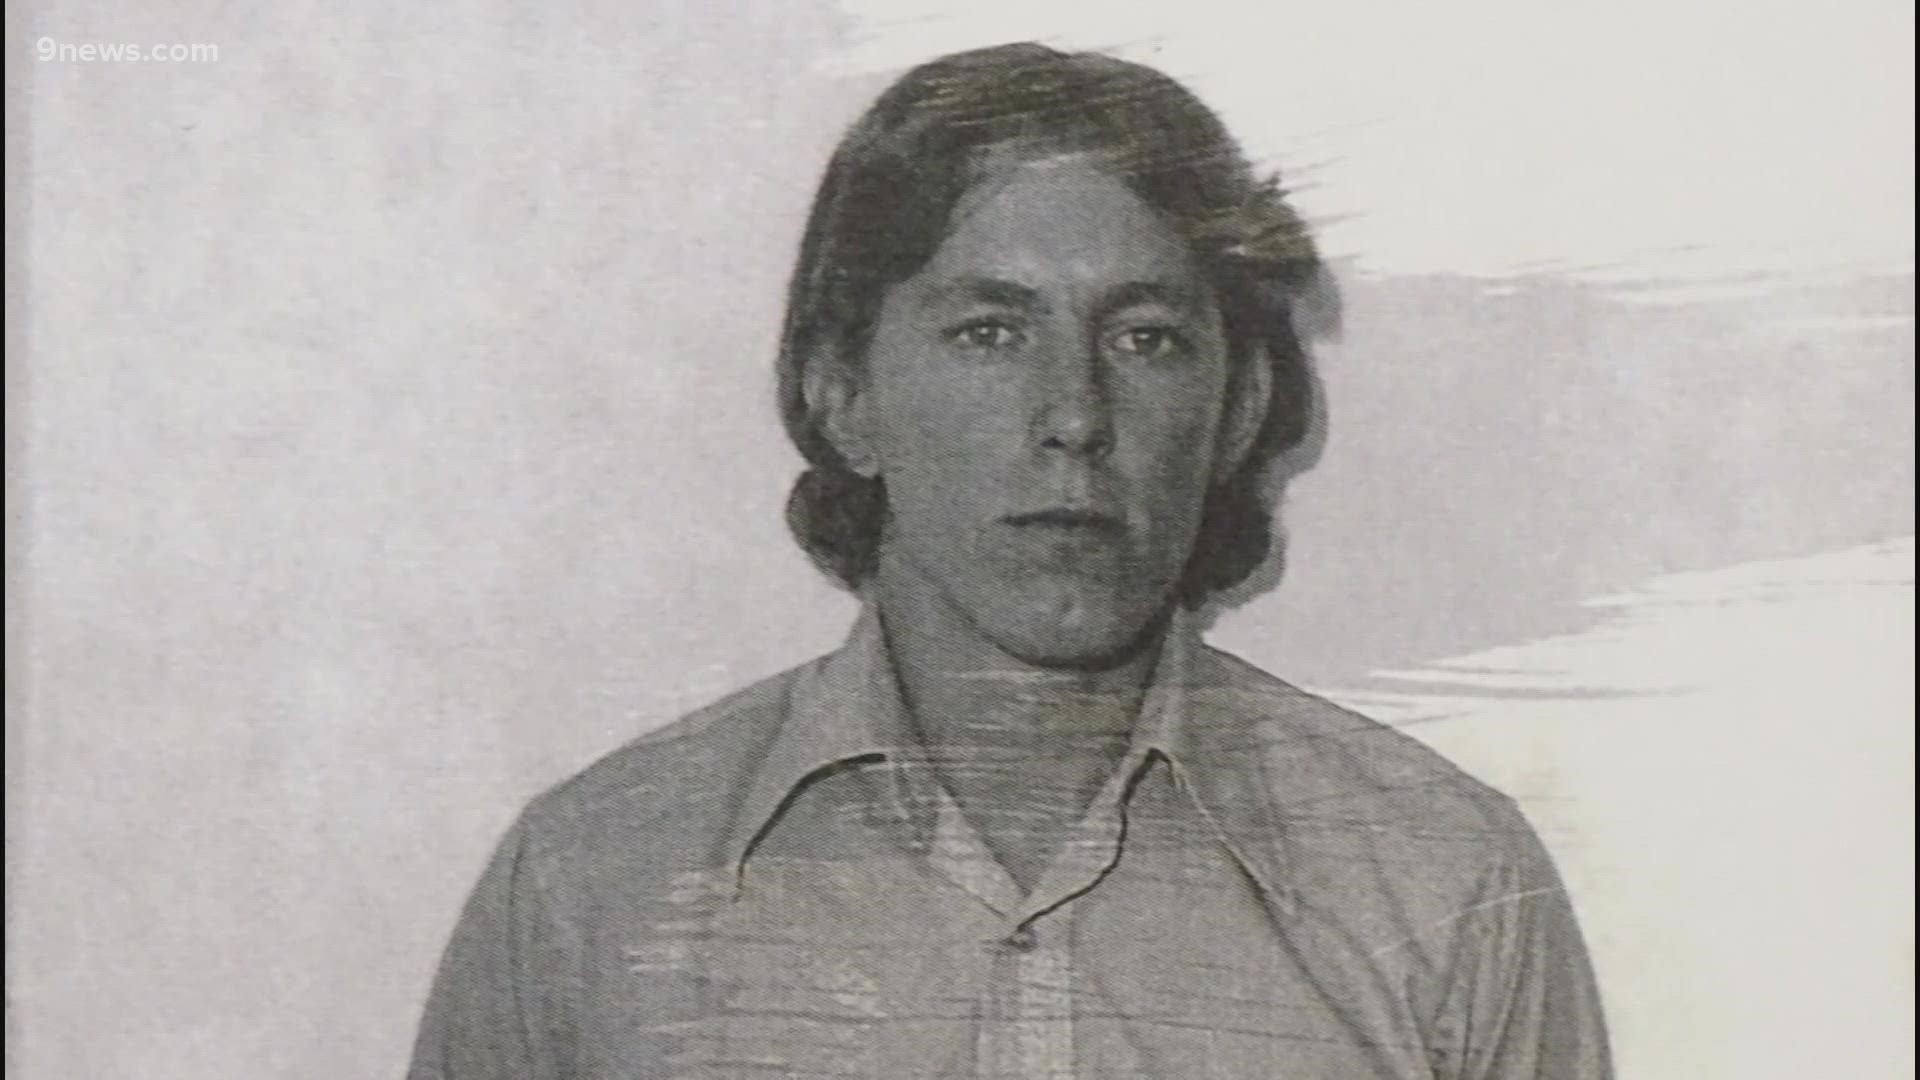 Judge Orders Trial For Suspect In 1982 Breckenridge Double Murder